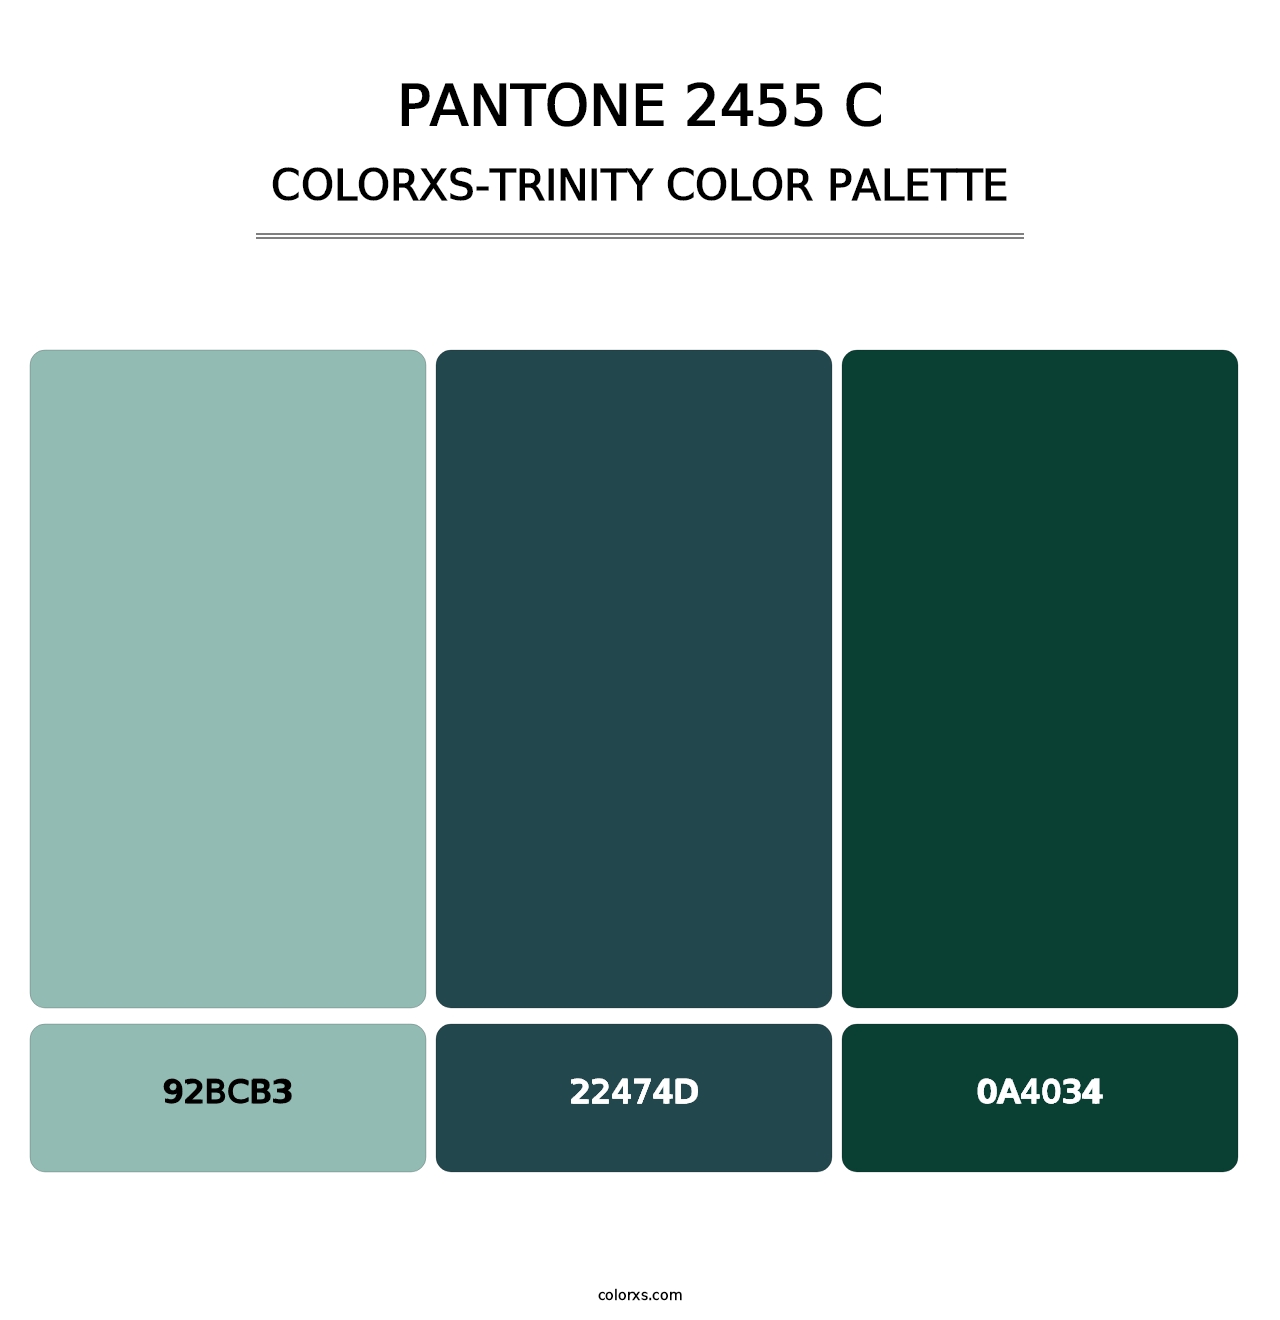 PANTONE 2455 C - Colorxs Trinity Palette